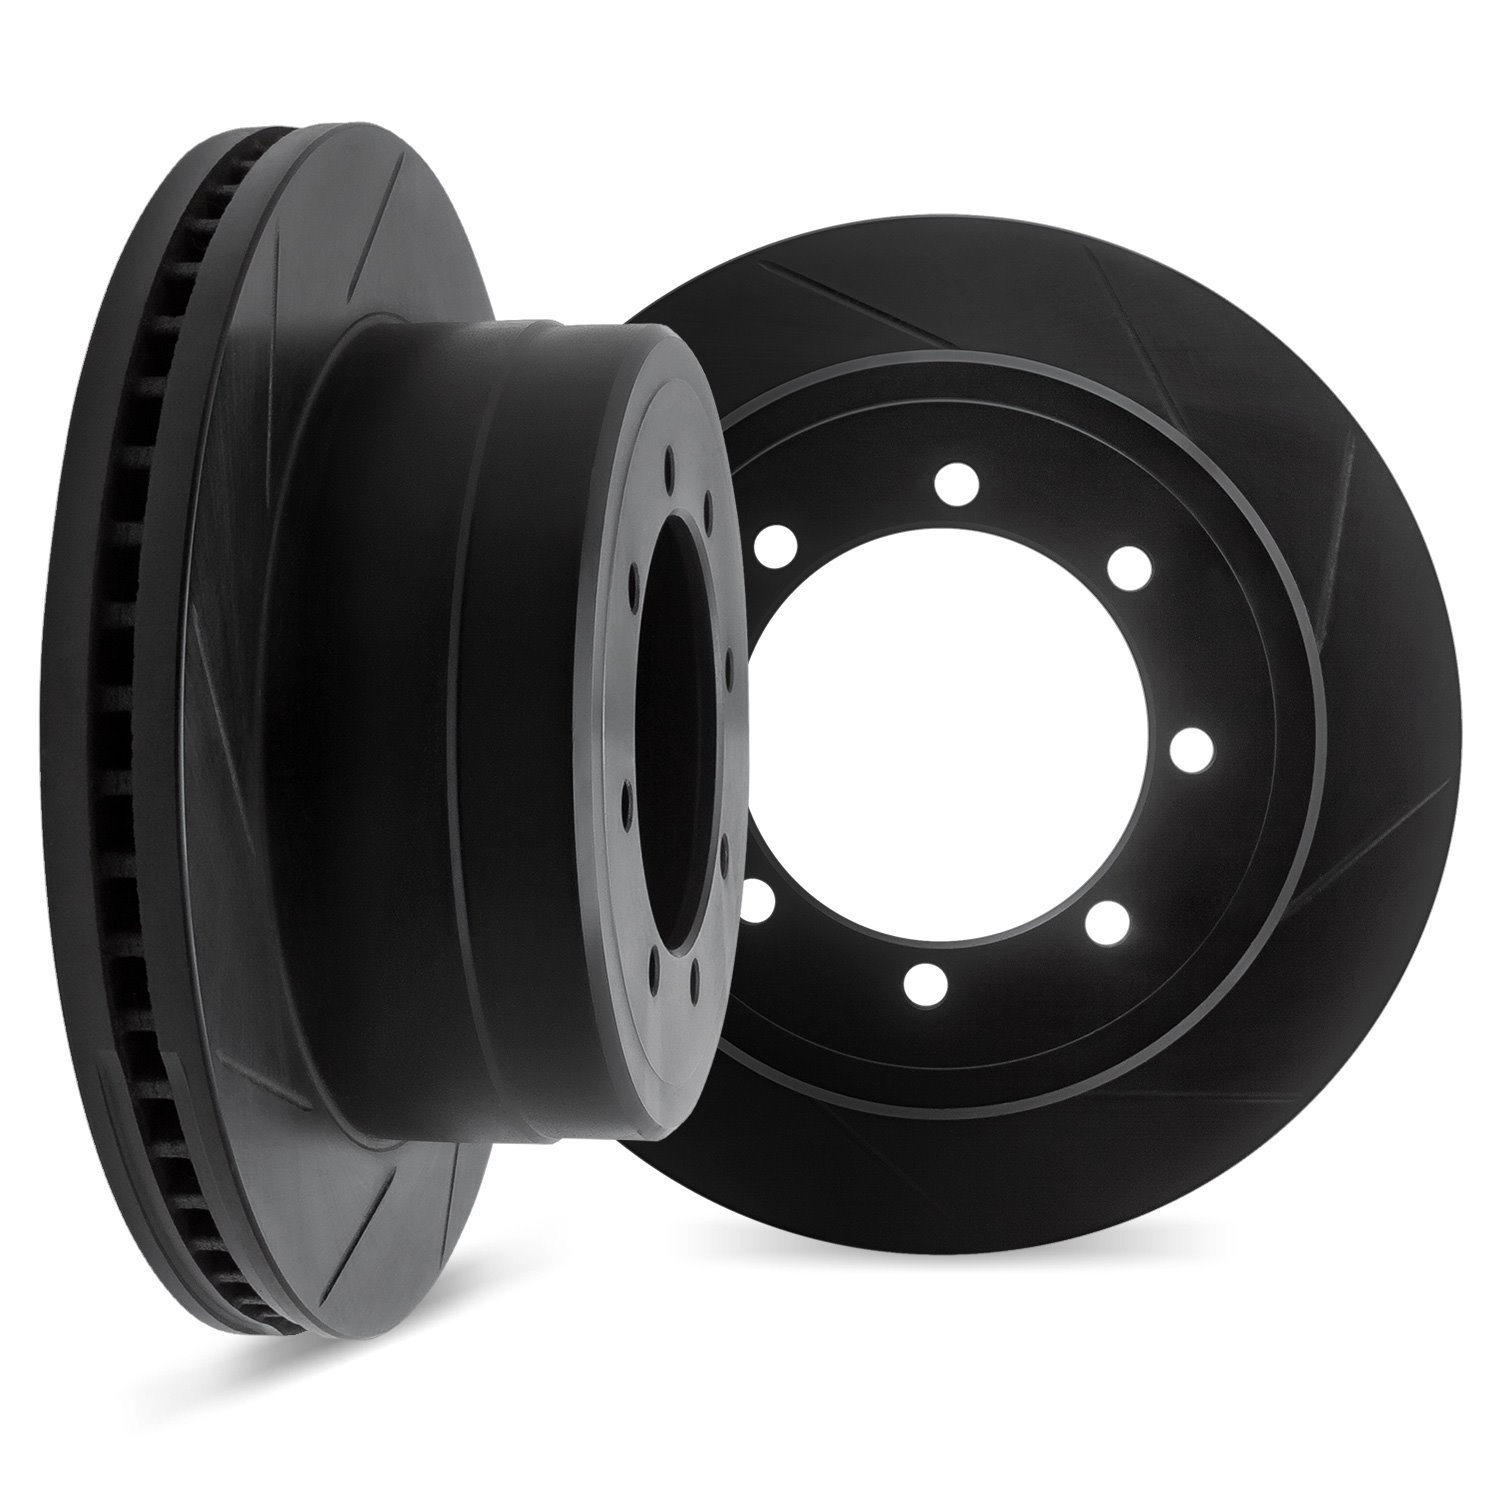 Slotted Brake Rotors [Black], Fits Select Mopar